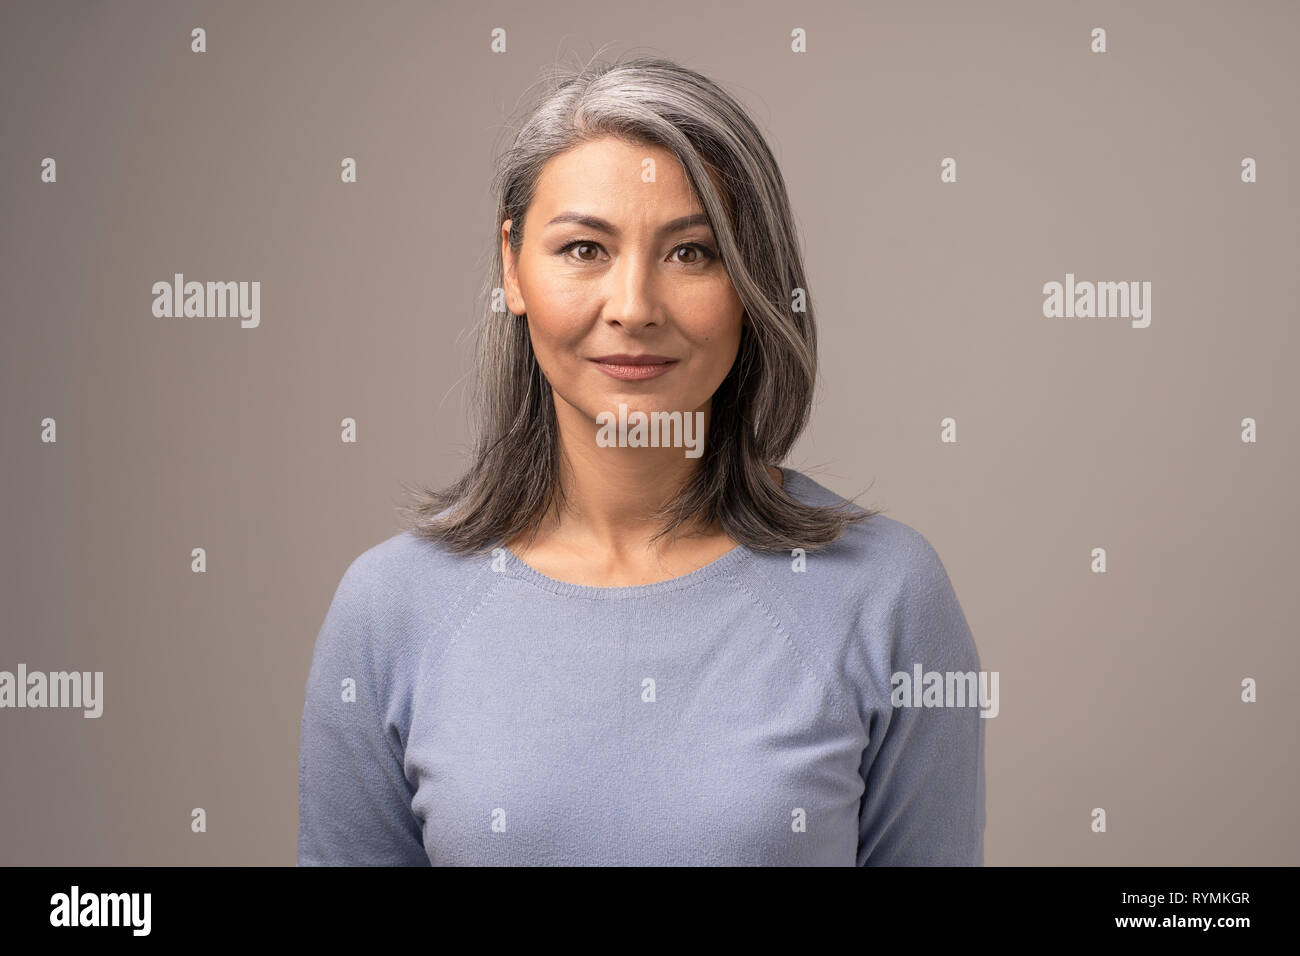 https://c8.alamy.com/comp/RYMKGR/beautiful-mongolian-woman-with-gray-hair-on-a-gray-background-RYMKGR.jpg